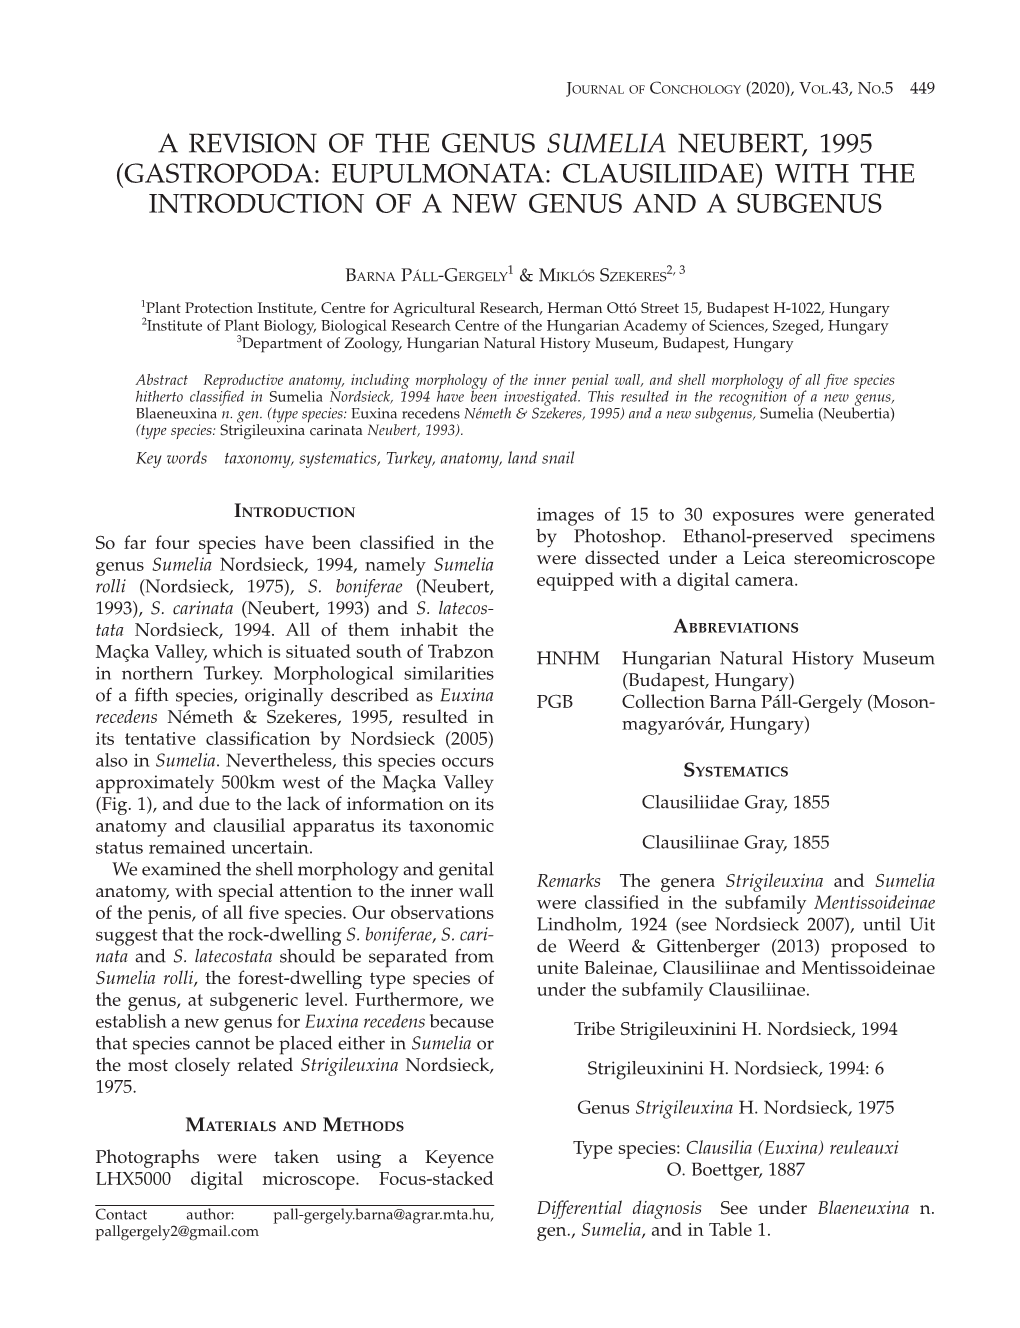 A Revision of the Genus Sumelia Neubert, 1995 (Gastropoda: Eupulmonata: Clausiliidae) with the Introduction of a New Genus and a Subgenus